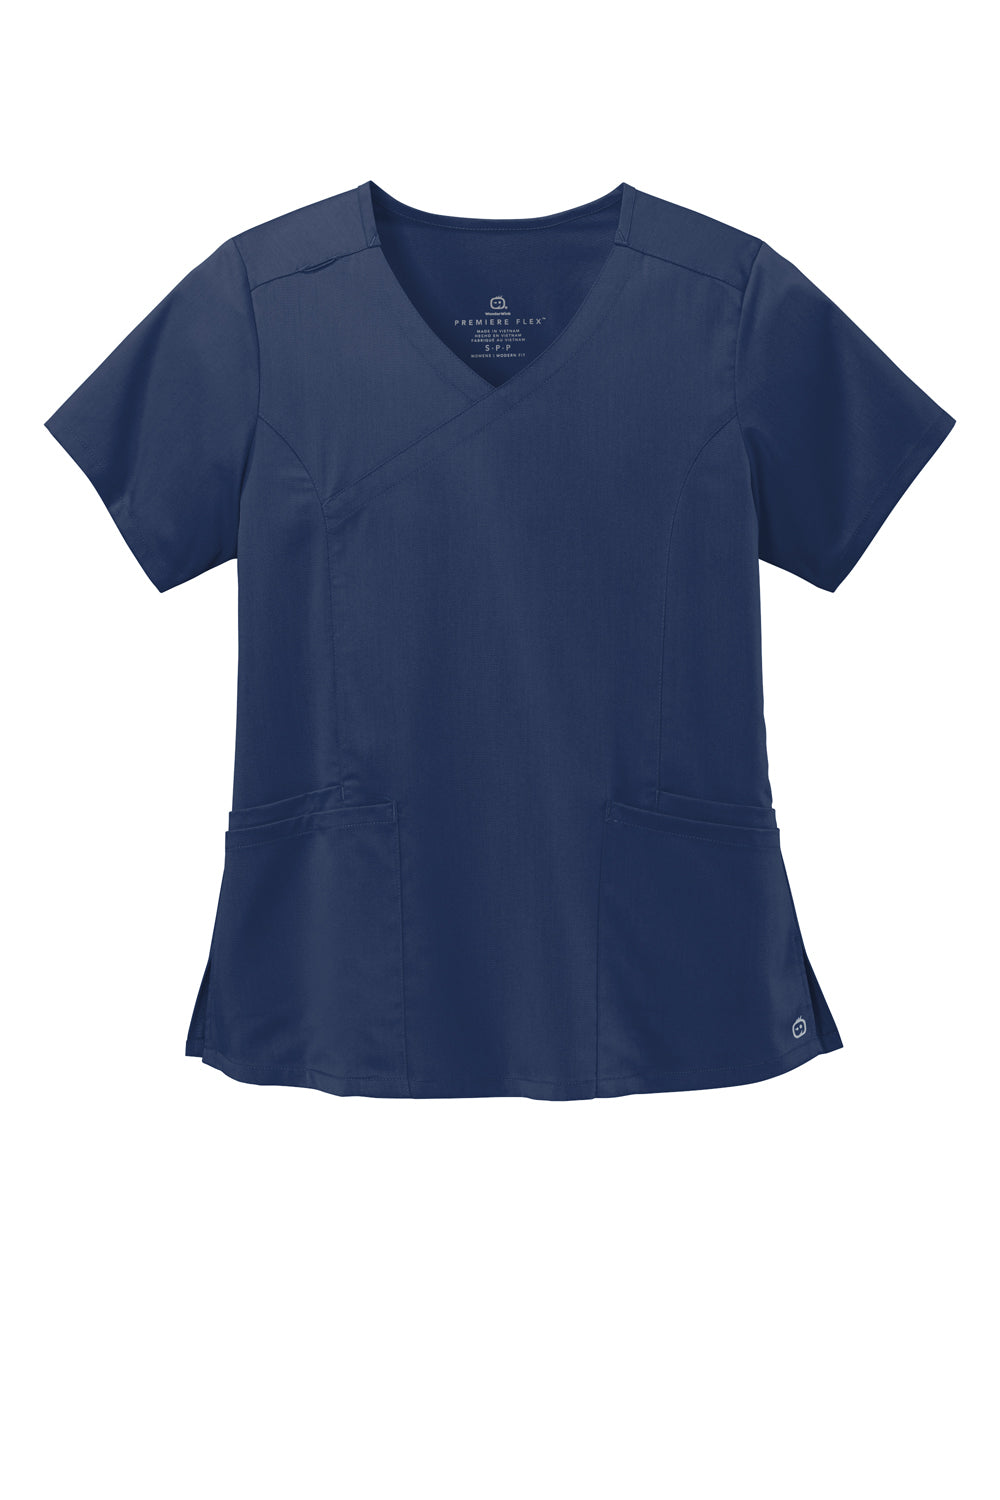 Wonderwink WW4268 Premiere Flex Short Sleeve V-Neck Mock Wrap Shirt Navy Blue Flat Front